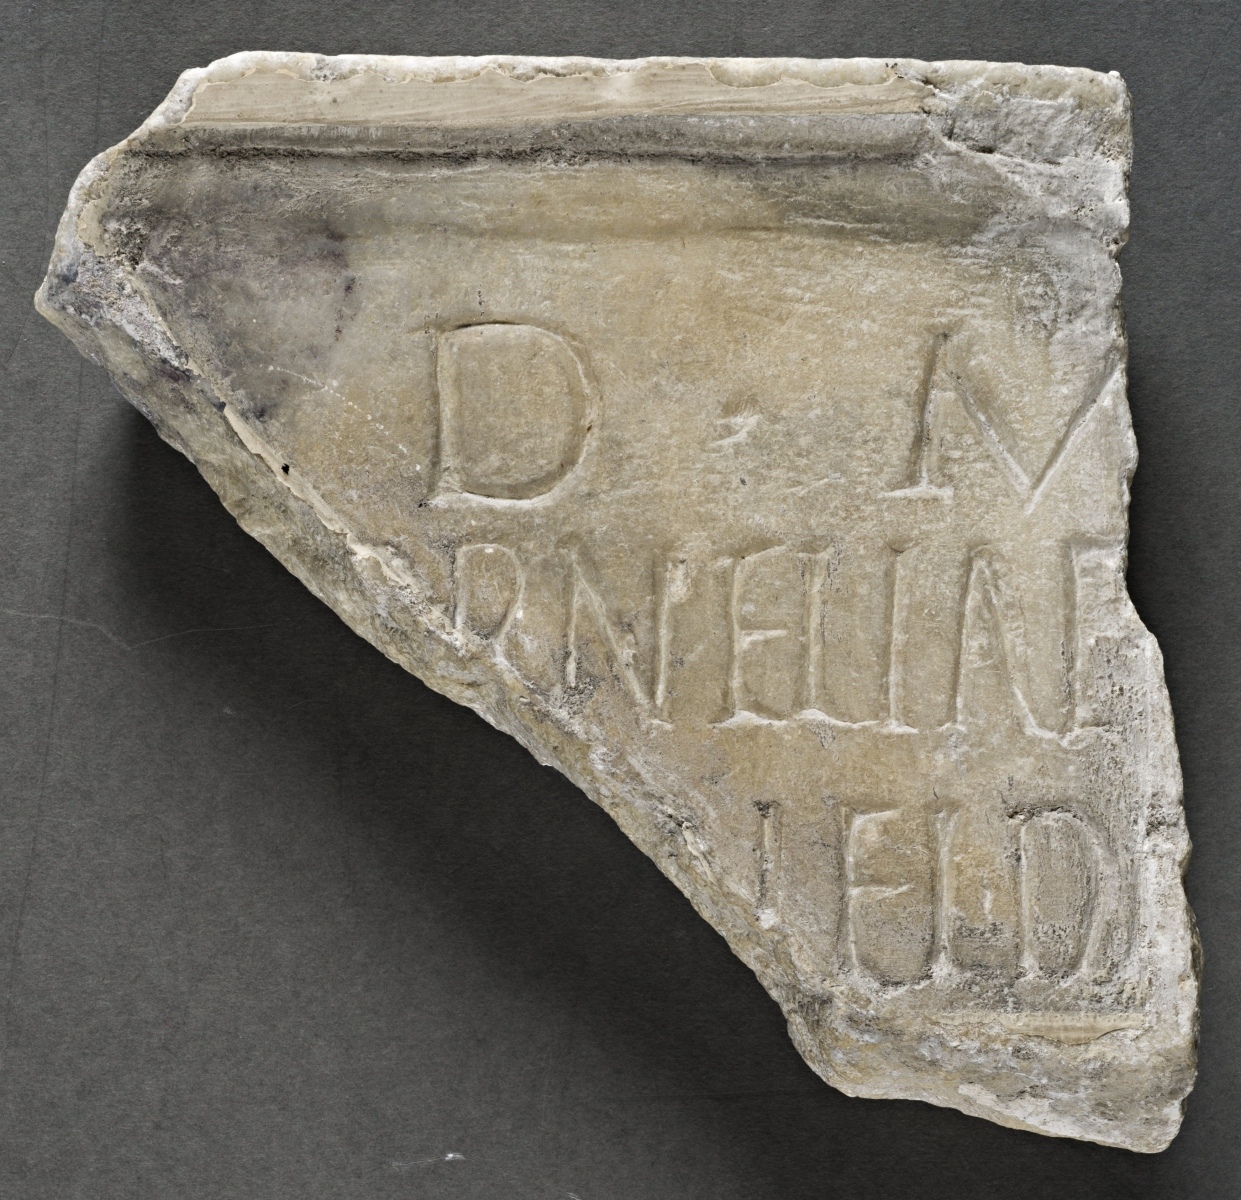 Fragmentary plaque from the tomb of Cornelia